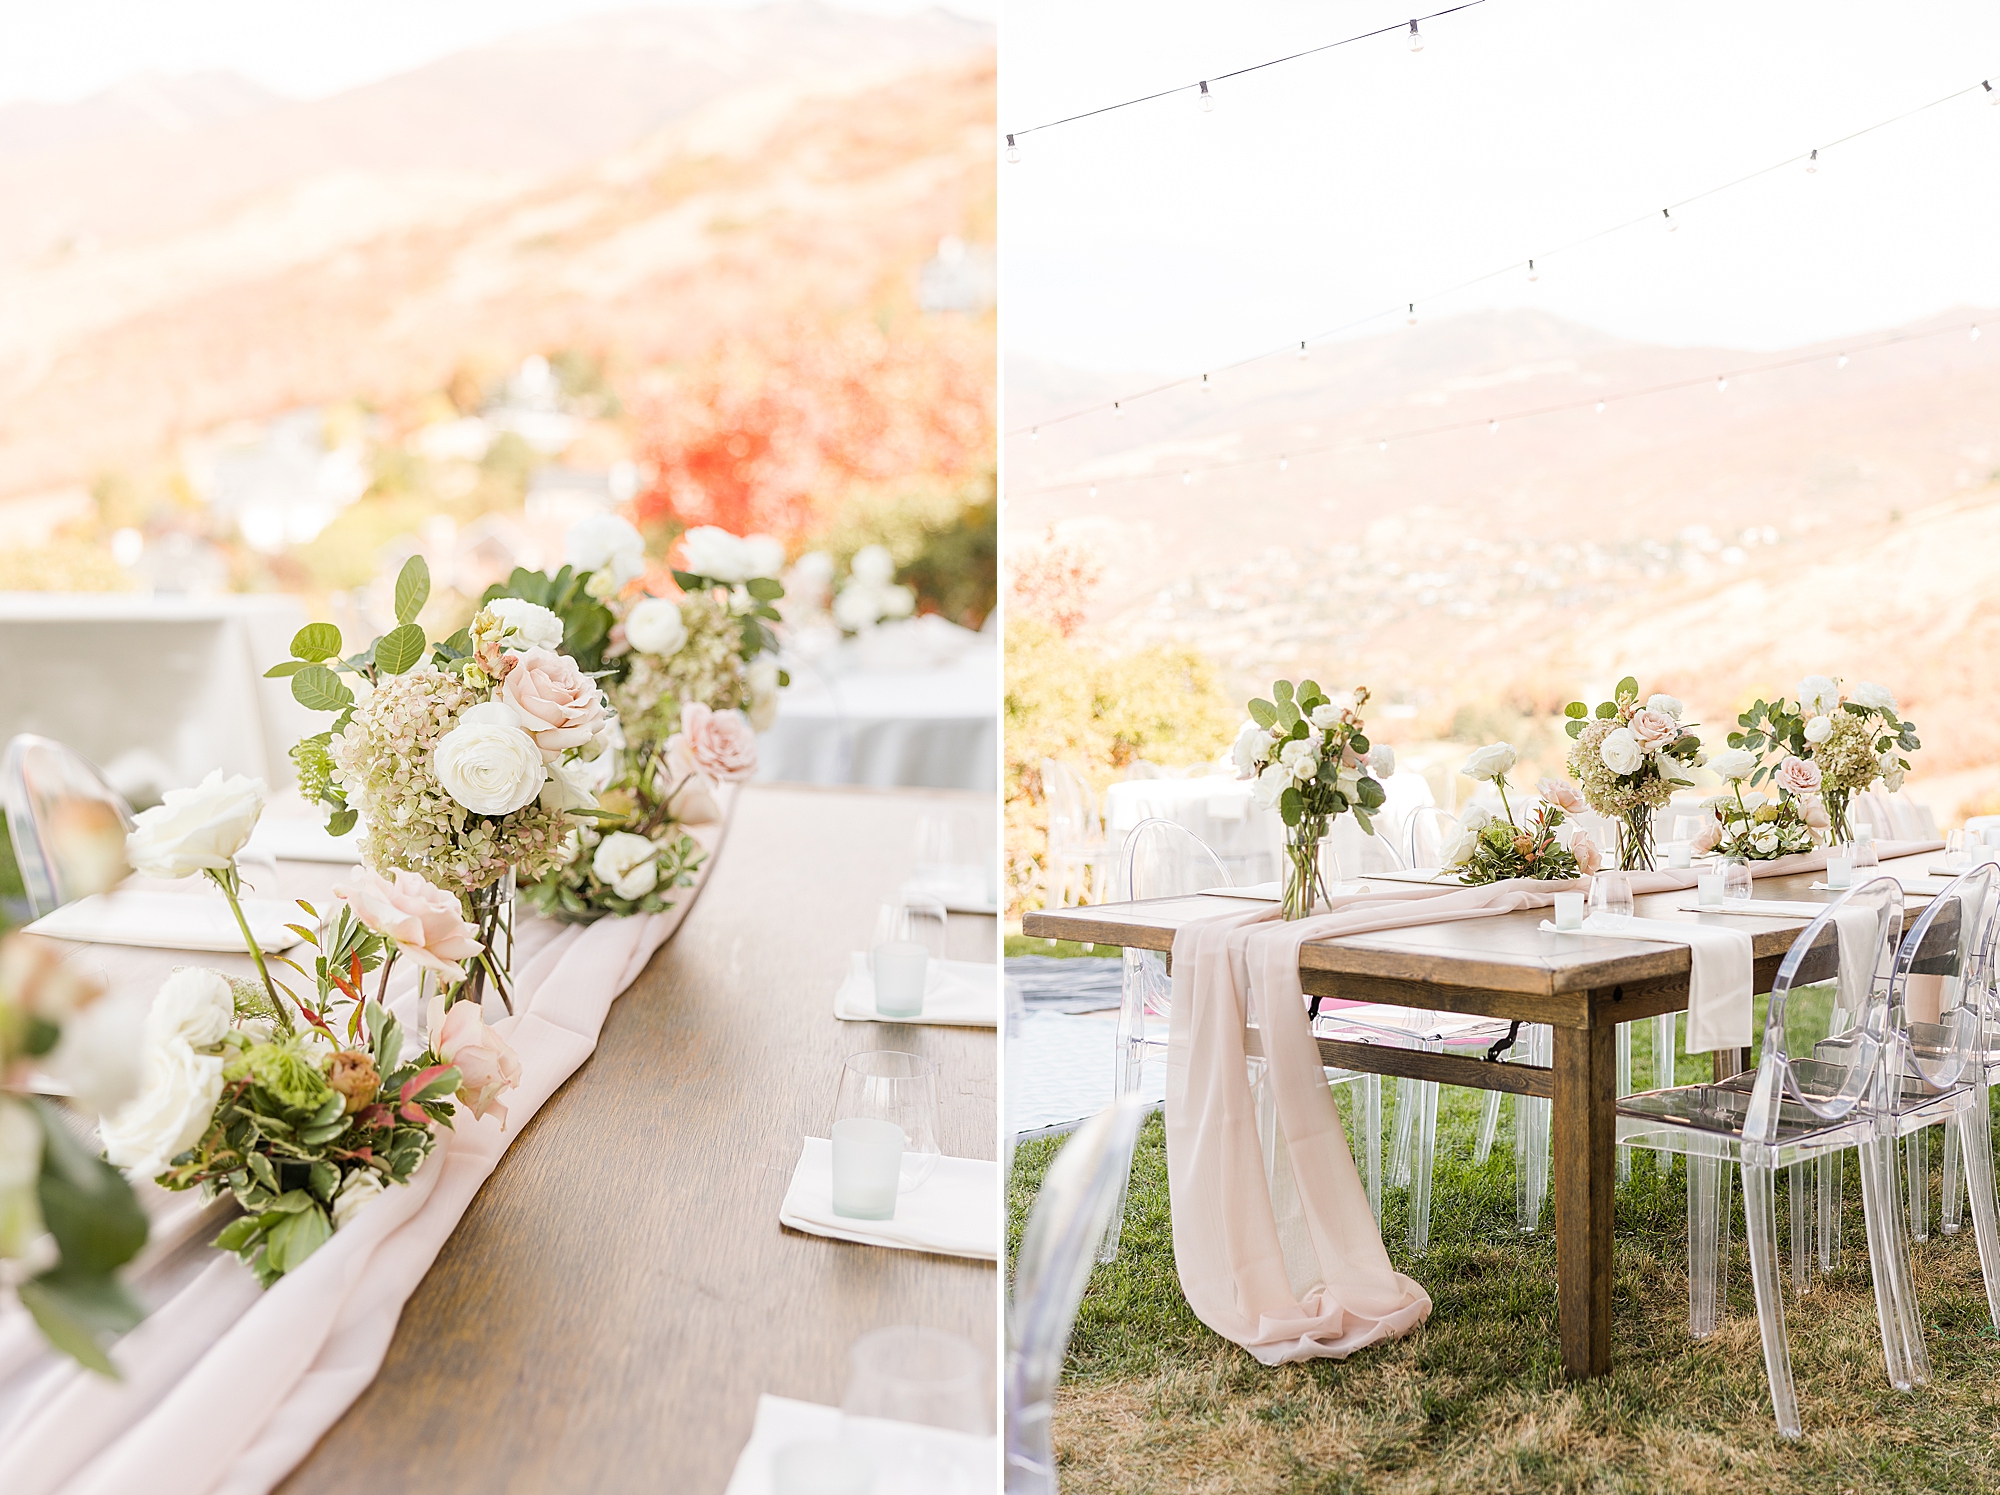 Wedding details from a fall wedding in Utah